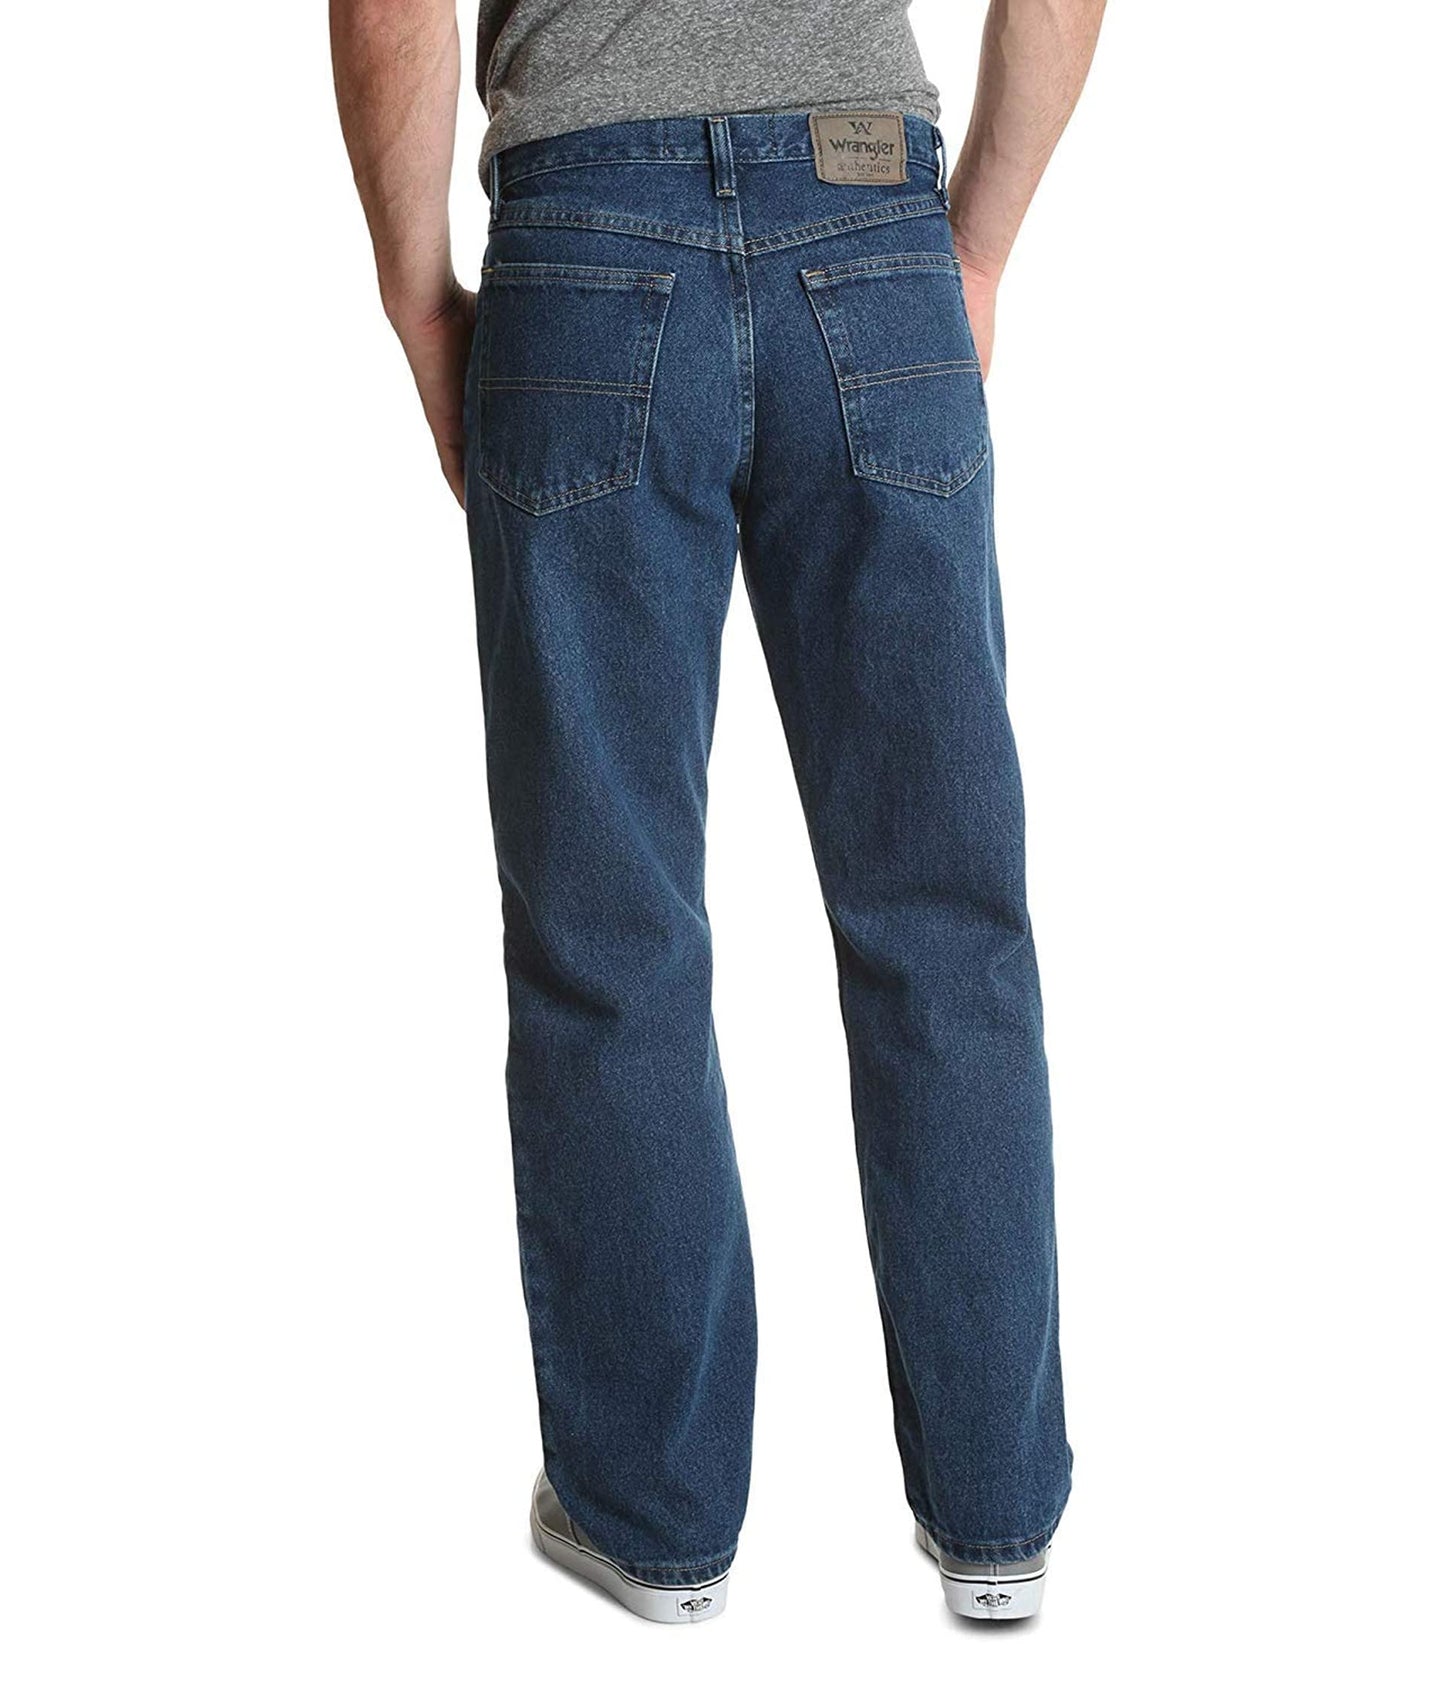 Wrangler Authentics Men's Classic 5-Pocket Relaxed Fit Cotton Jean, Dark Stonewash, 42W x 32L